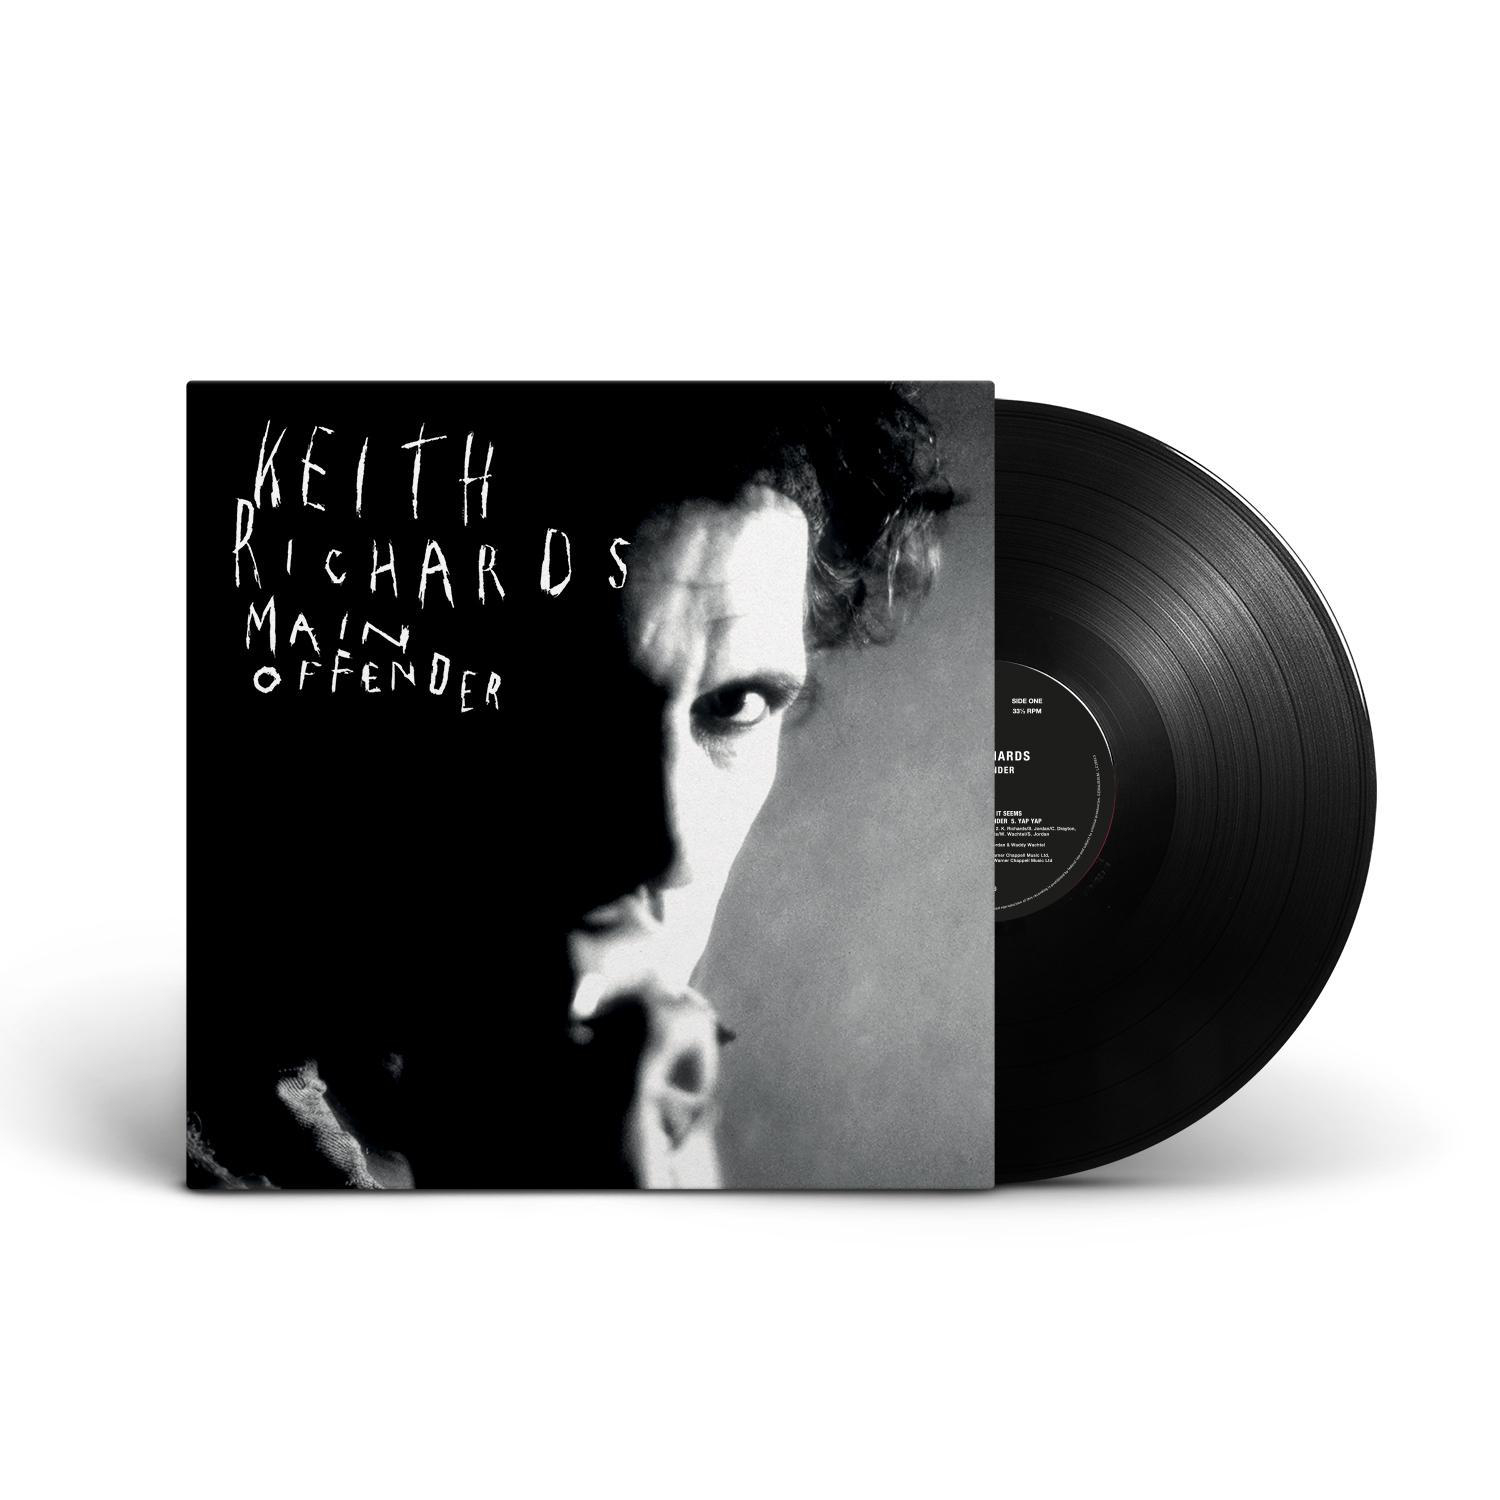 Keith Richards - Main (Remastered) Offender (Vinyl) 